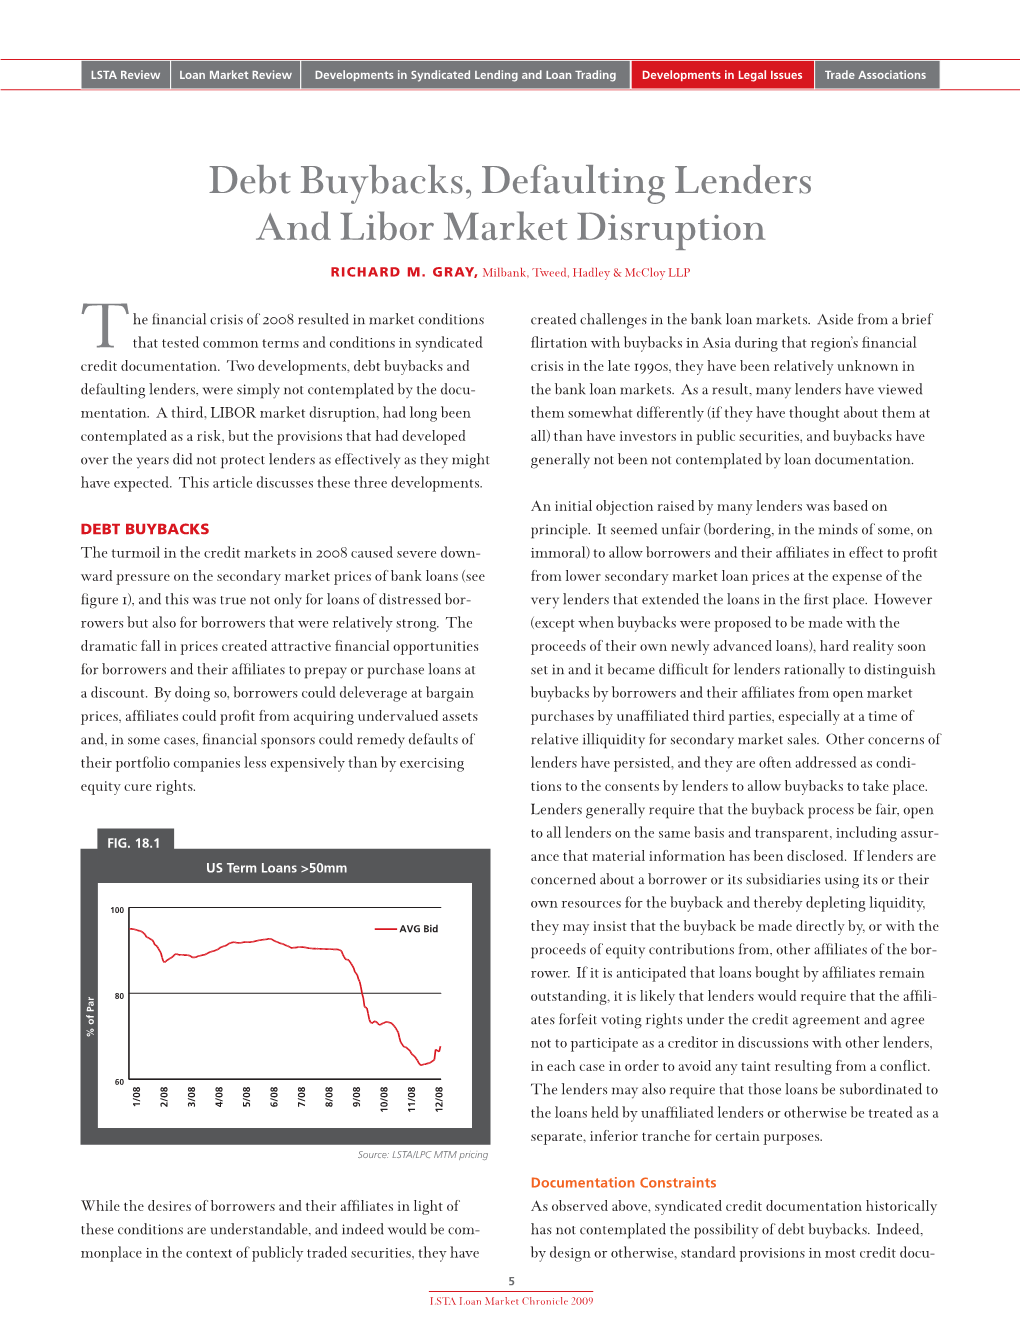 Debt Buybacks, Defaulting Lenders and Libor Market Disruption